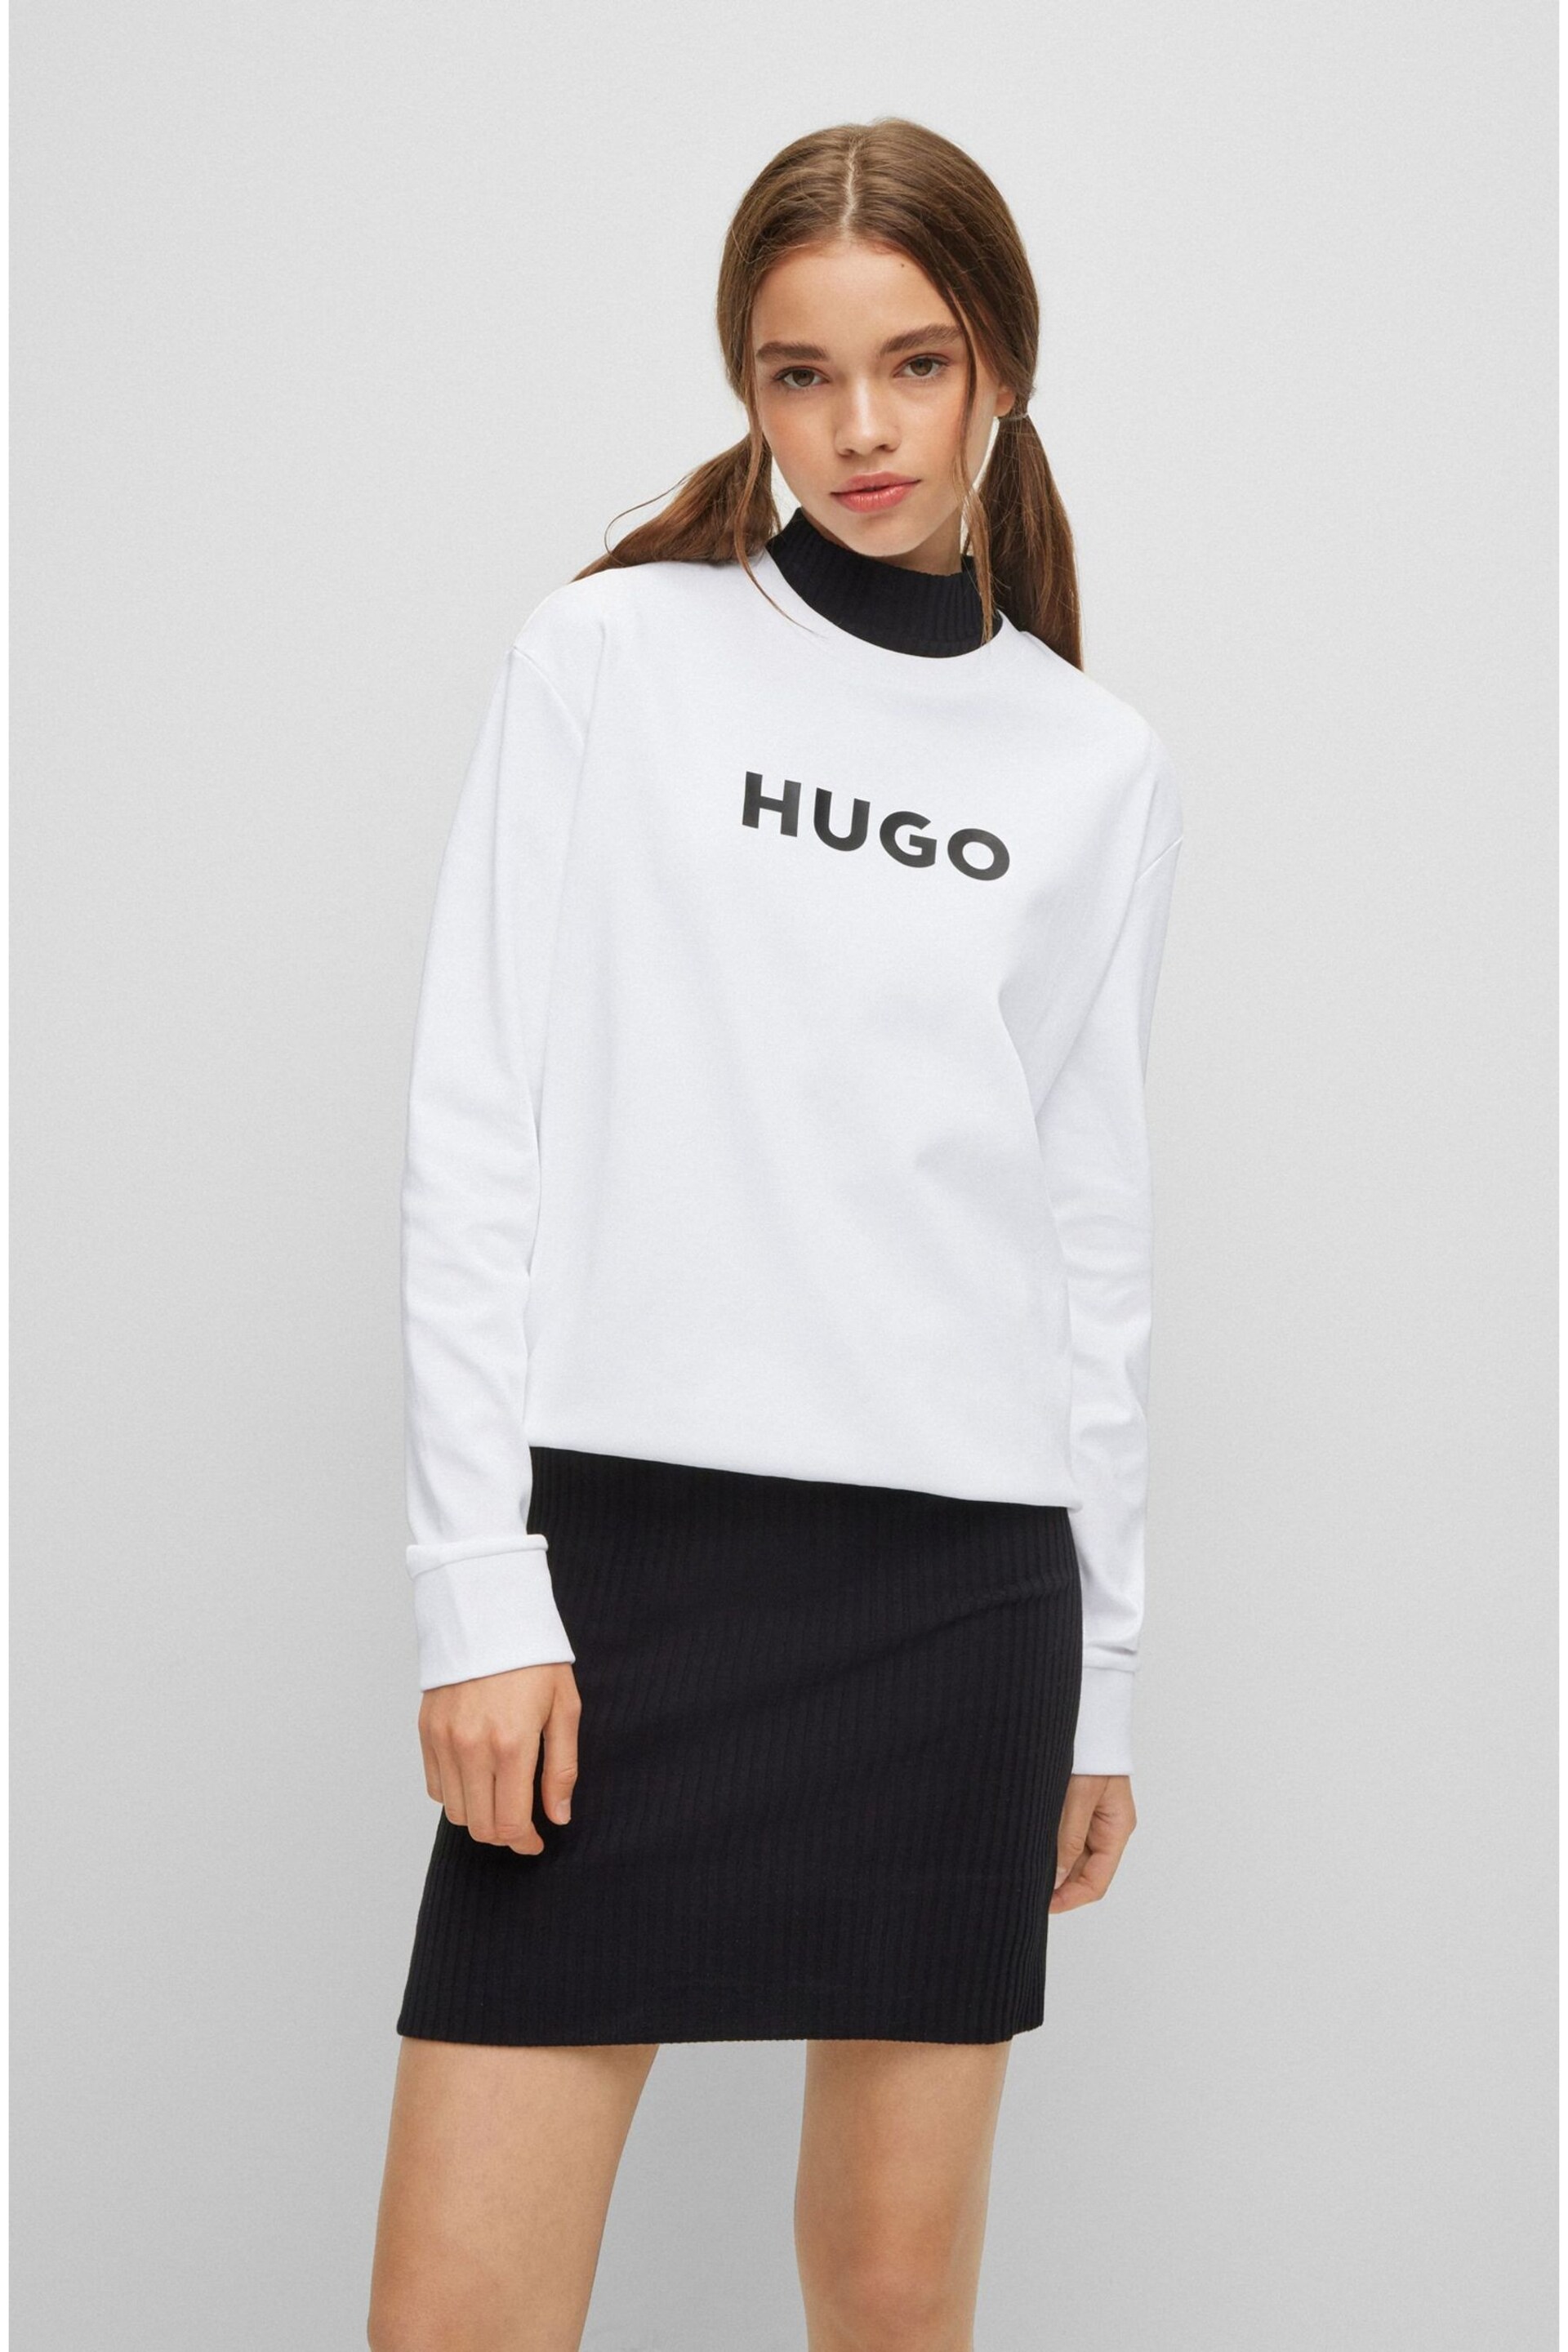 HUGO Large Logo Crew Neck Sweatshirt - Image 2 of 4